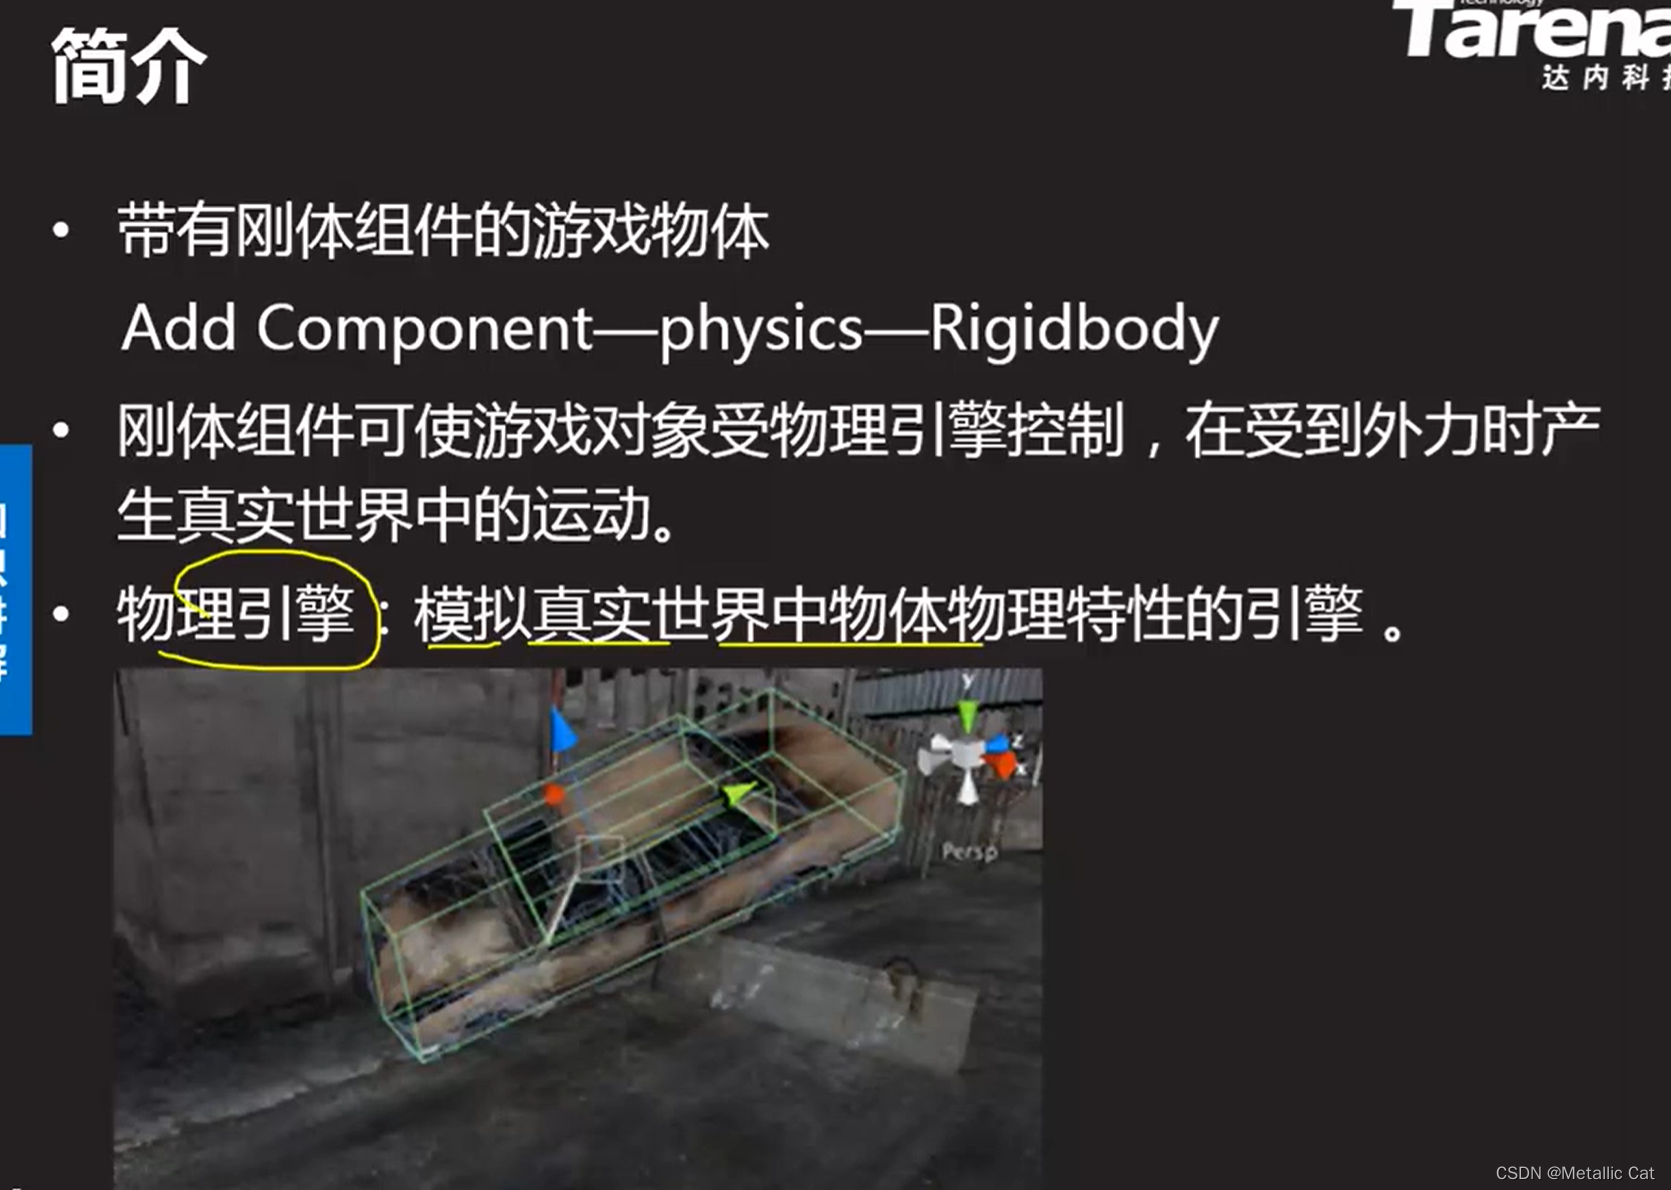 Unity --- Physics Engine ---- RigidBody with collider